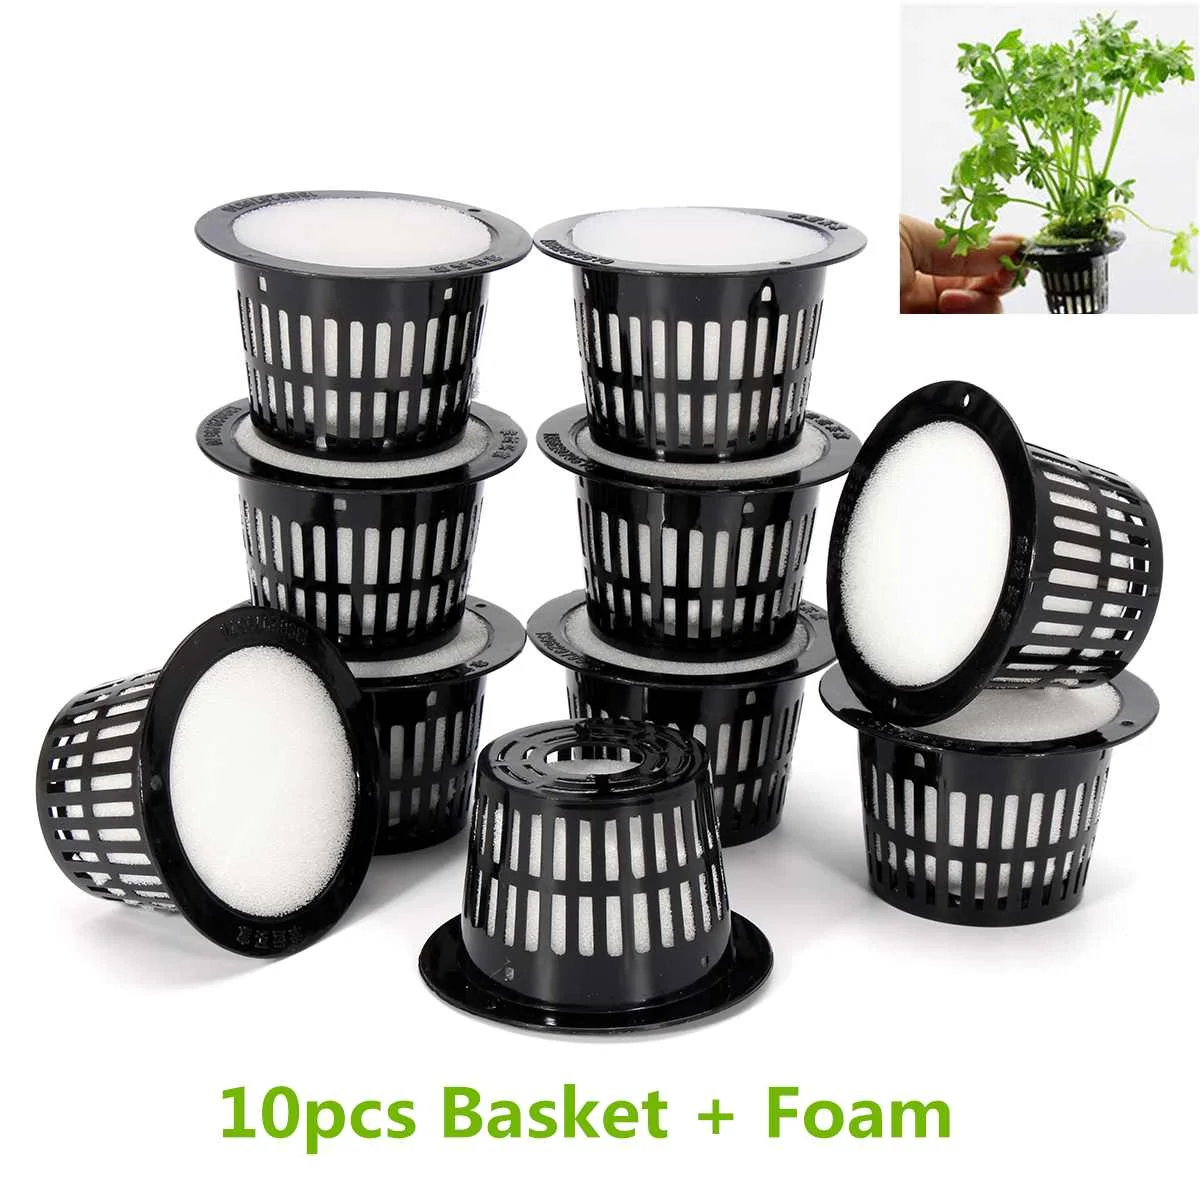 10Pcs Mesh Pot Net Cup Basket Hydroponic System Garden Plant Grow Vegetable Cloning Foam Insert Seed Germinate Nursery Pots